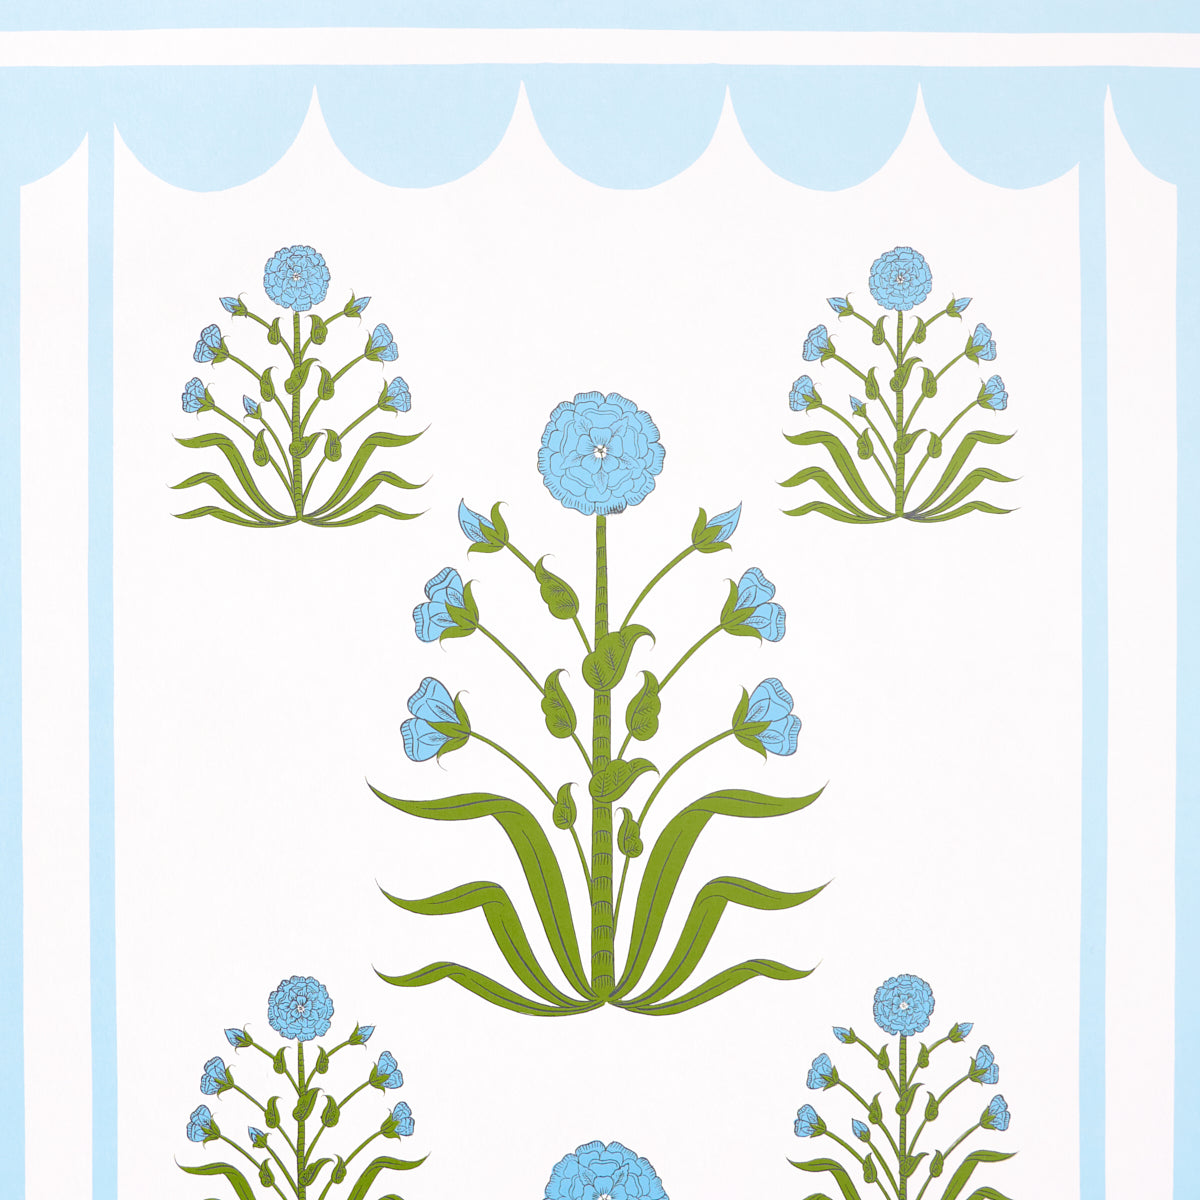 Purchase 5014441 | Royal Poppy Panel B, Blue - Schumacher Wallpaper